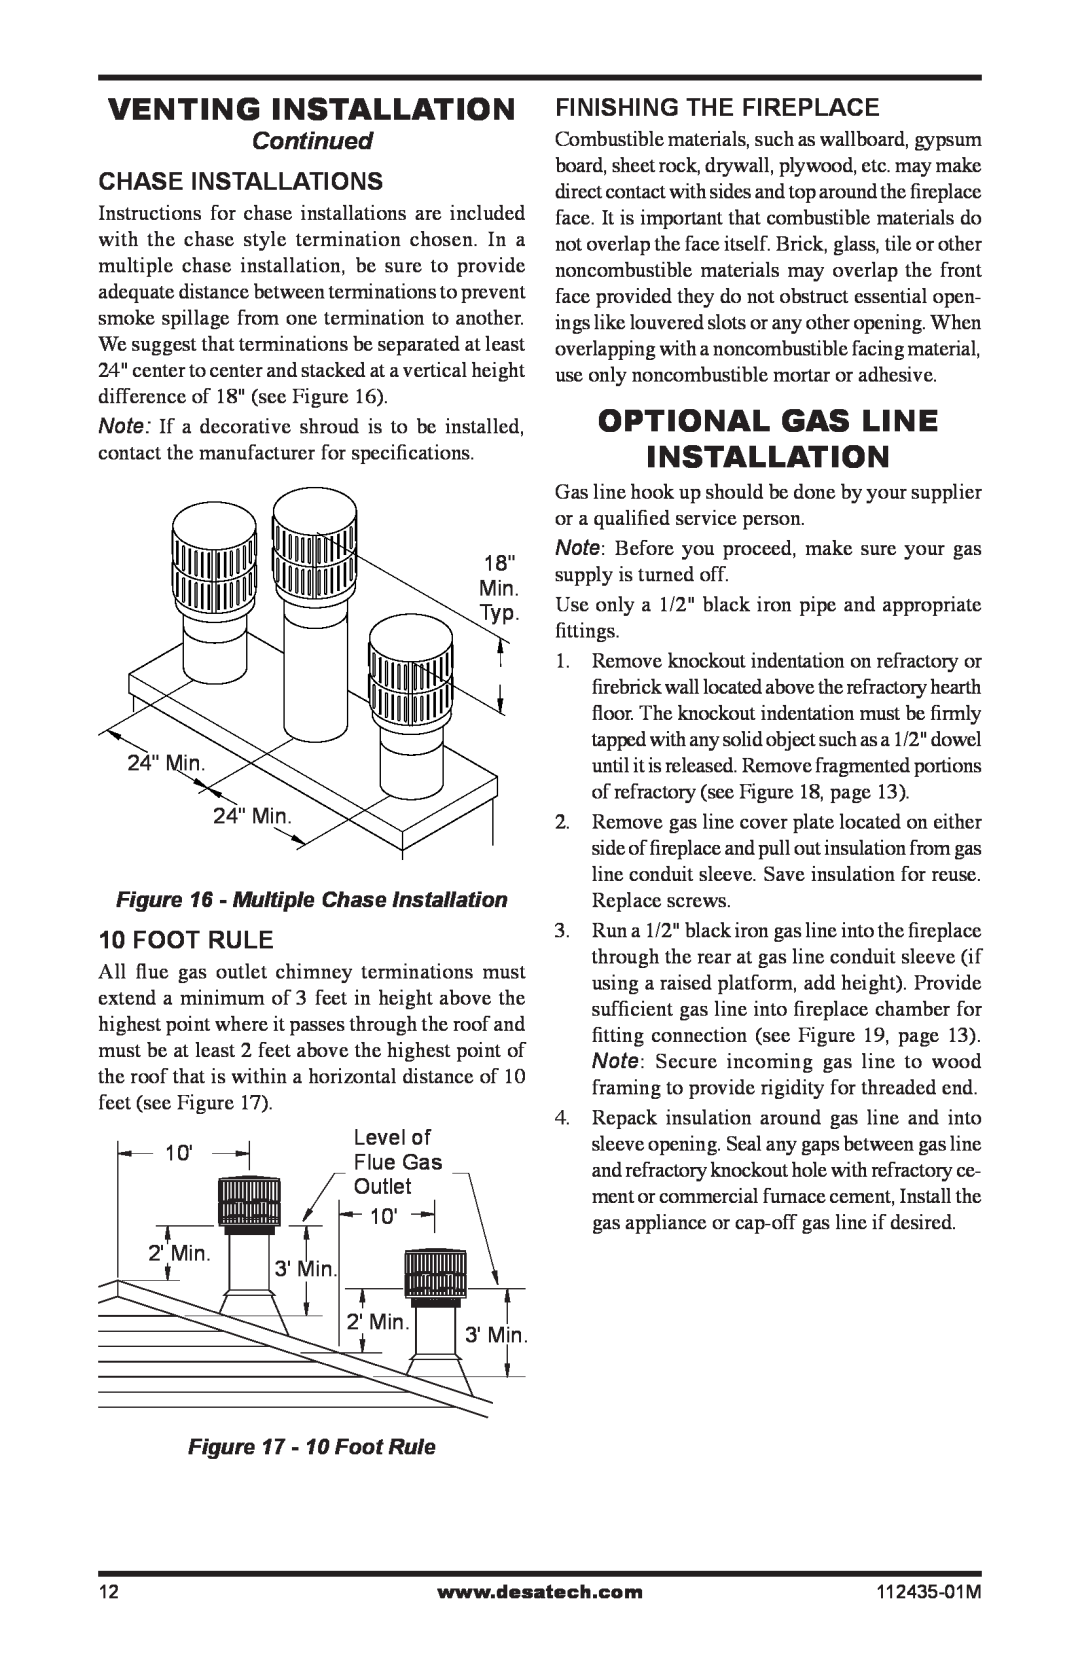 Desa (V)gM42 Venting Installation, Optional Gas Line Installation, Continued, Chase installations, foot rule, 10 Foot Rule 